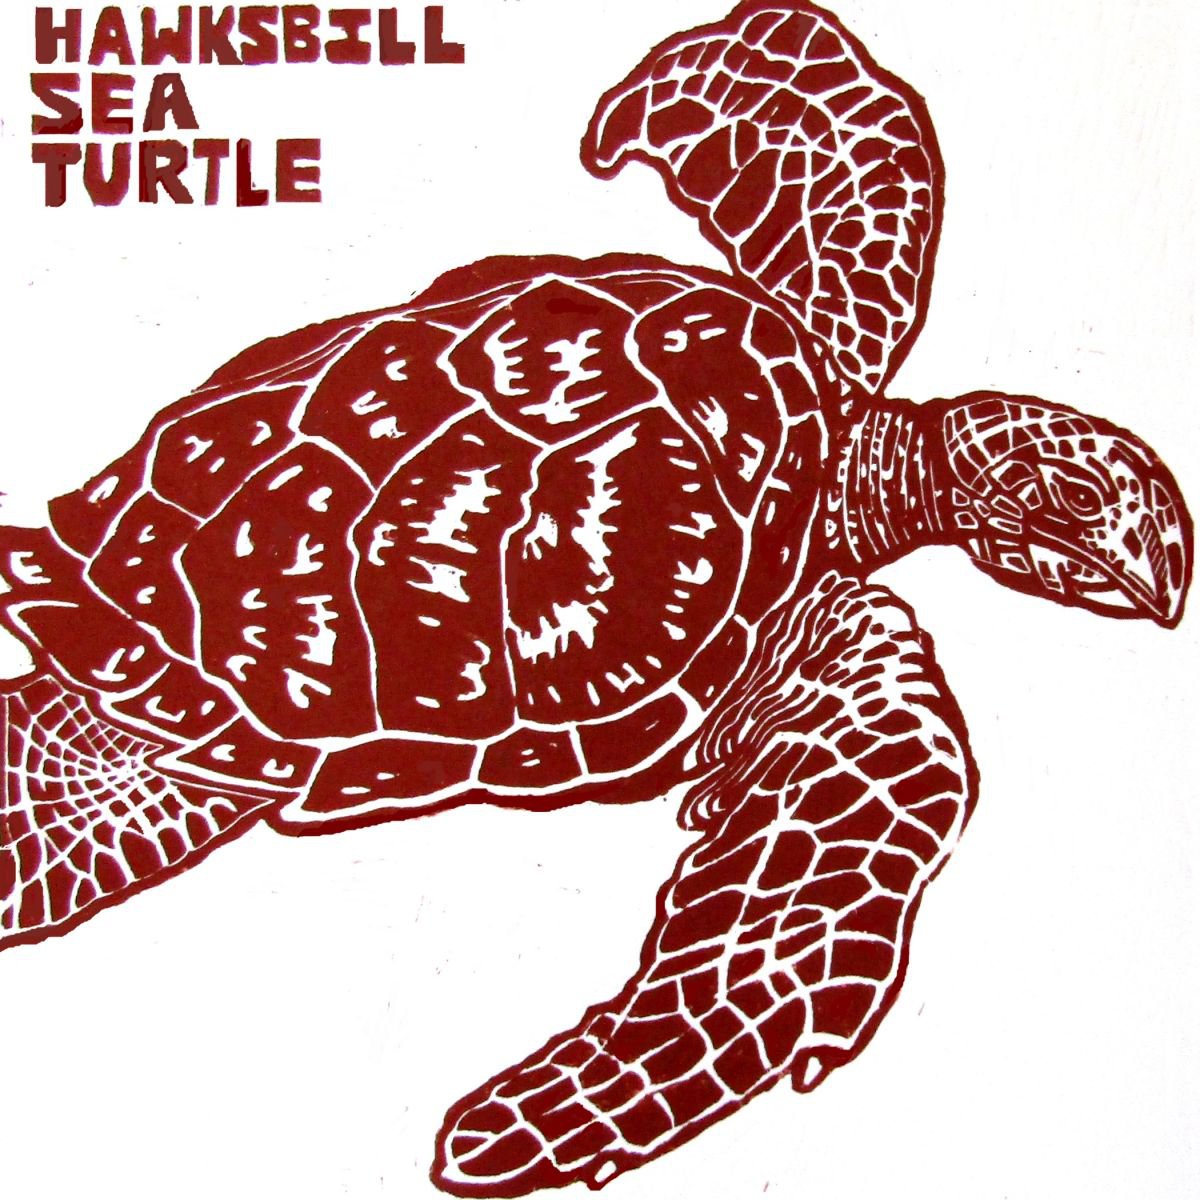 HAWKSBILL SEA TURTLE by Laurel Macdonald